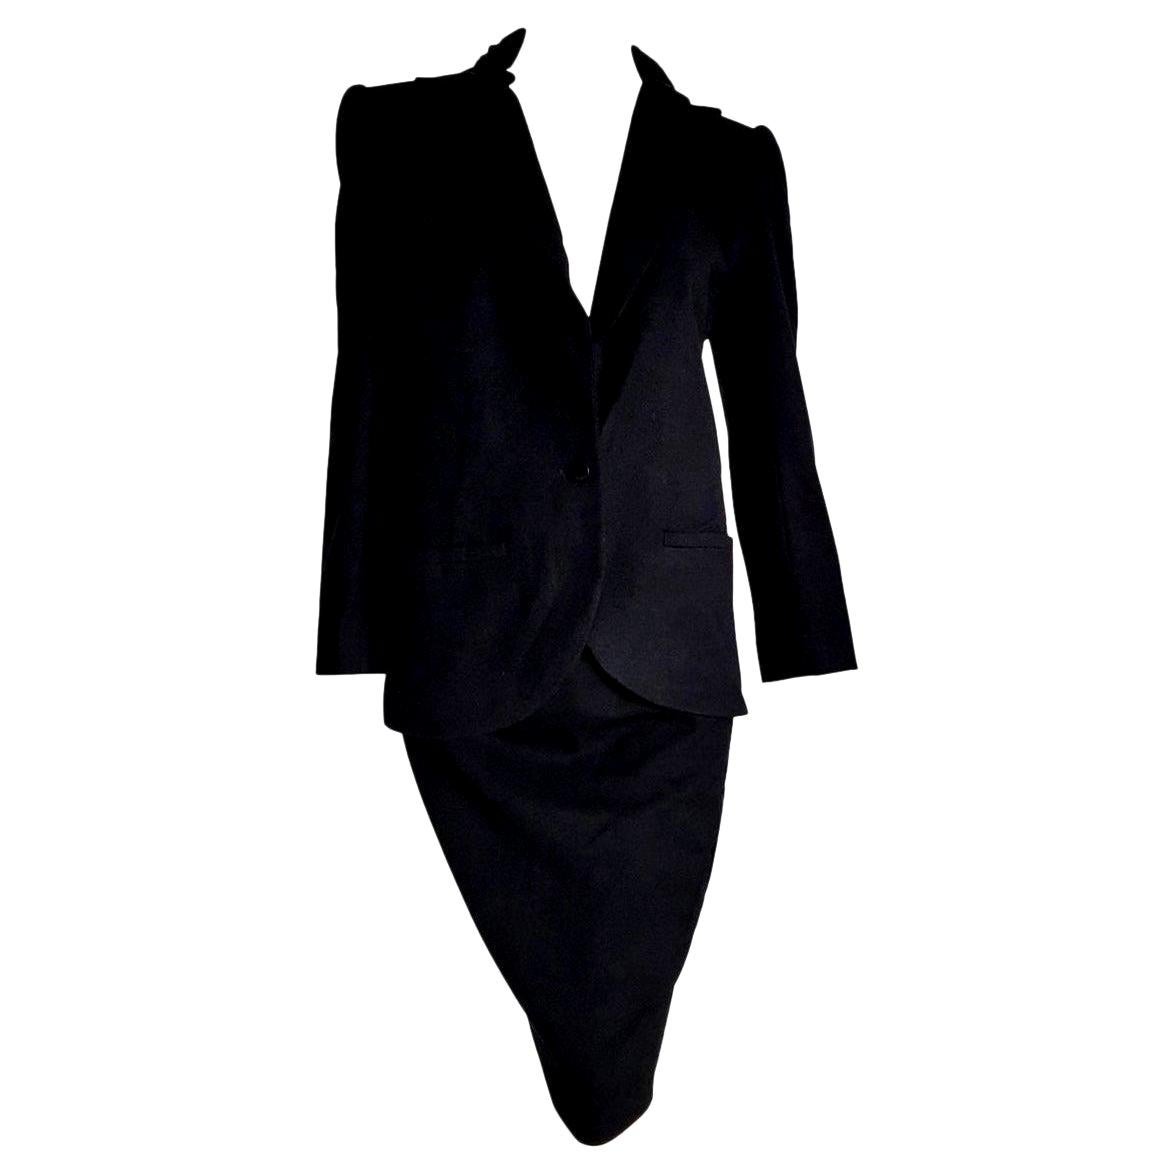 VALENTINO "New" Black Cashmere Jacket Collar Velvet Skirt Suit - Unworn For Sale